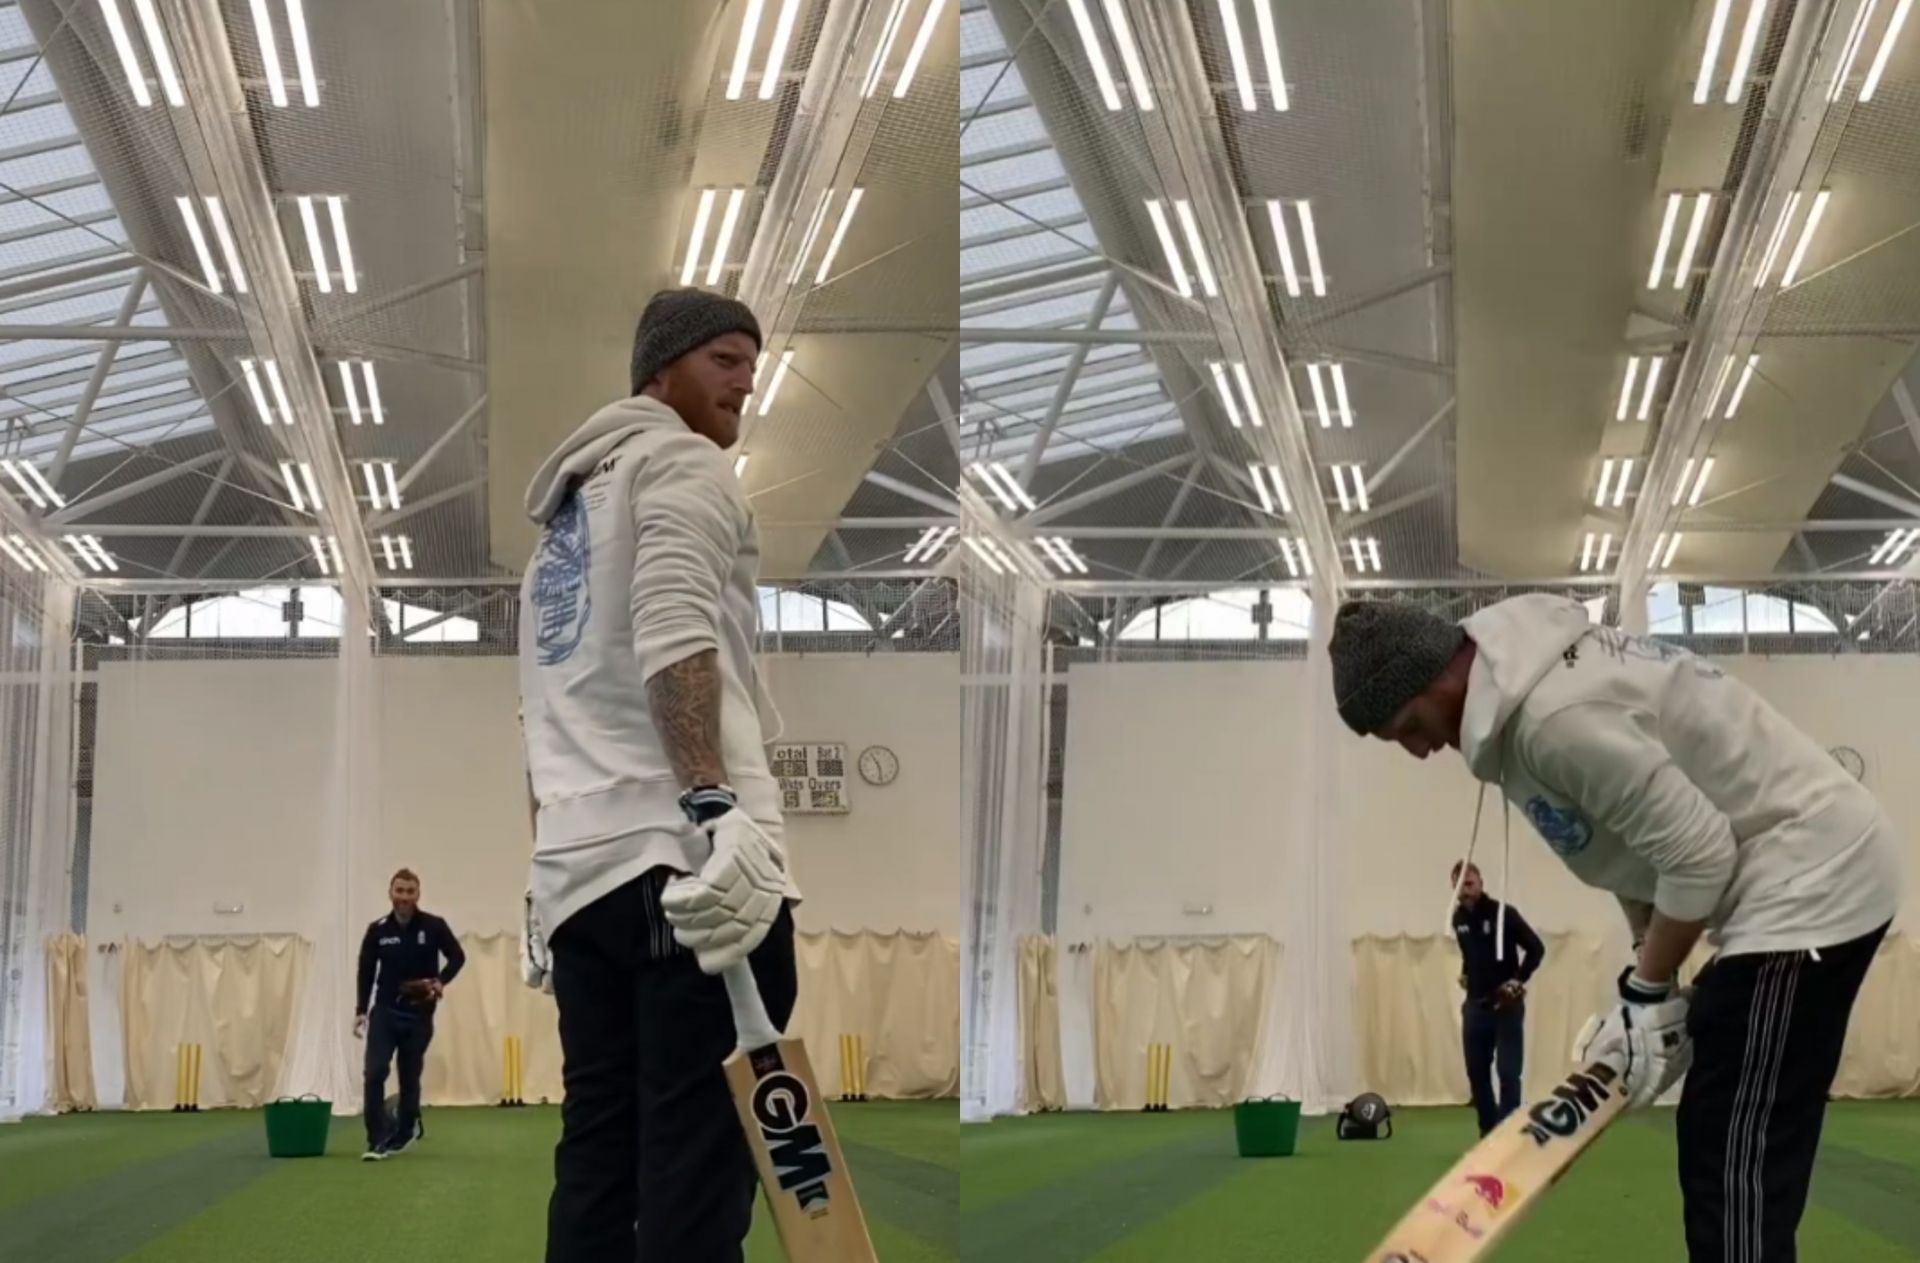 Ben Stokes batting in an indoor facility. (Image: Ben Stokes Instagram).